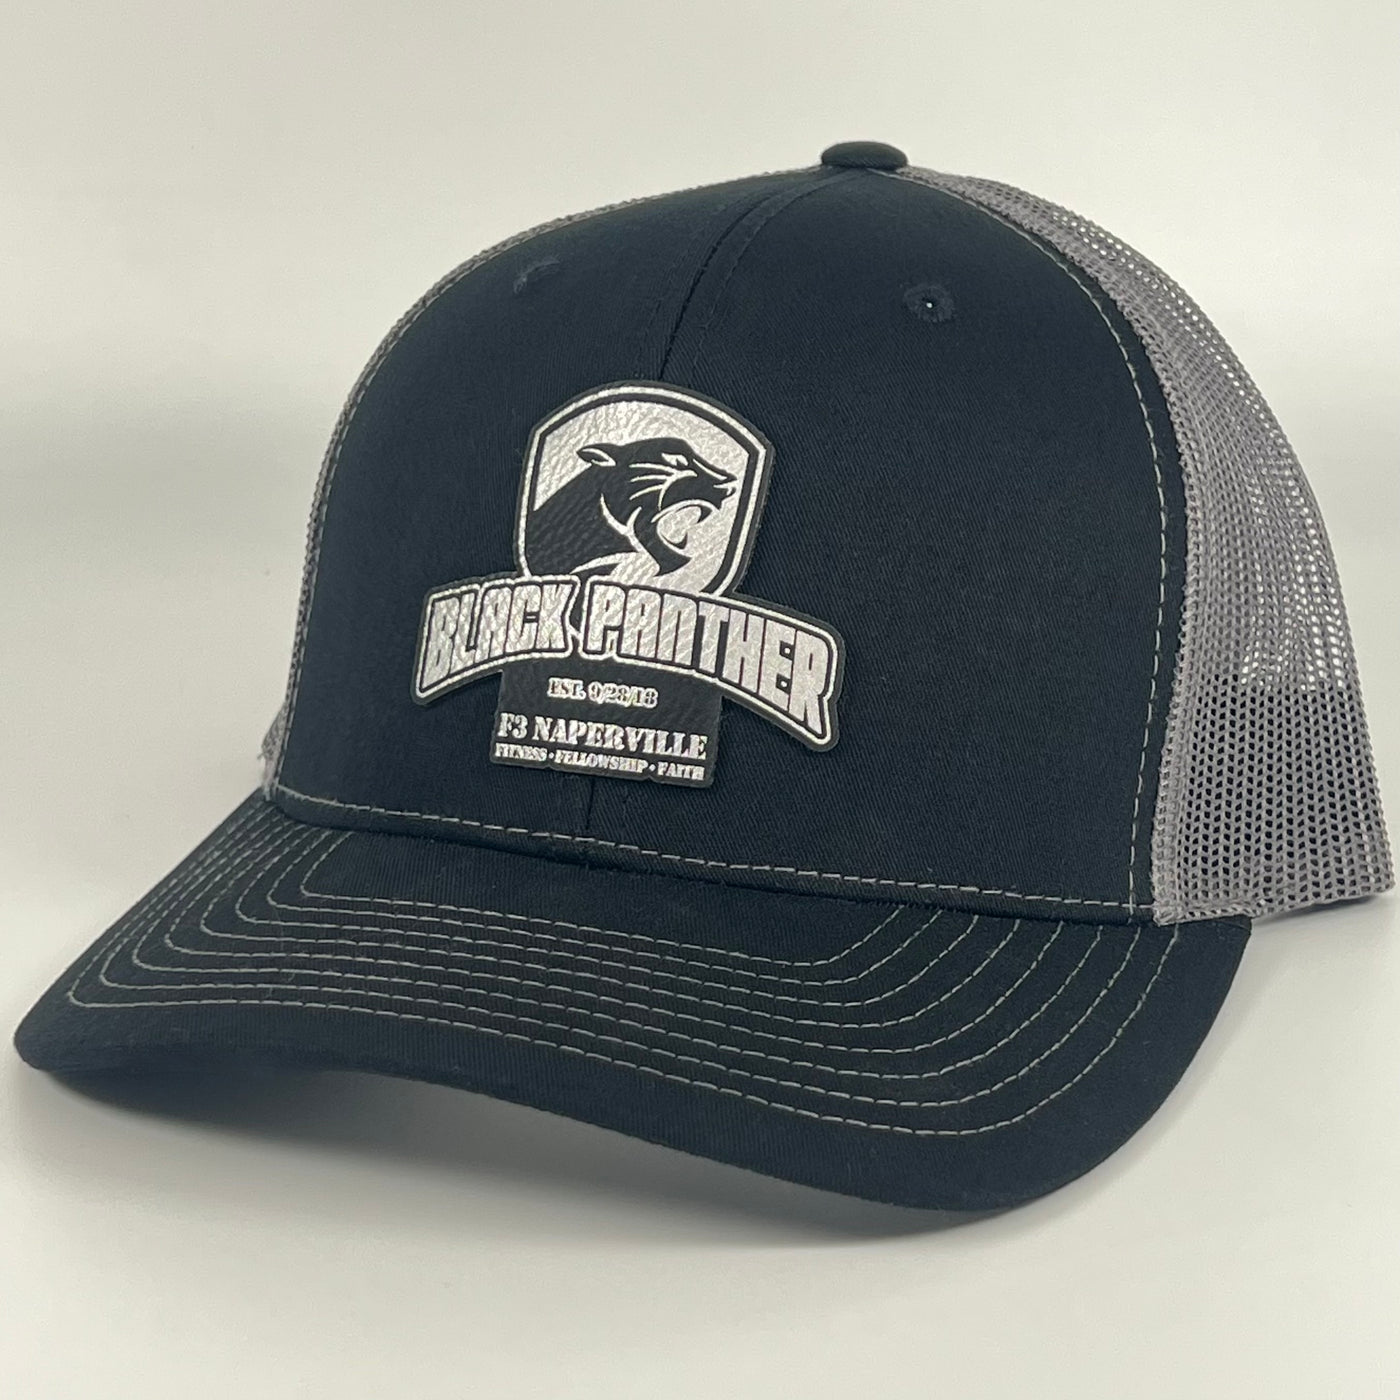 F3 Naperville Black Panther Leatherette Patch Hat Pre-Order October 2022